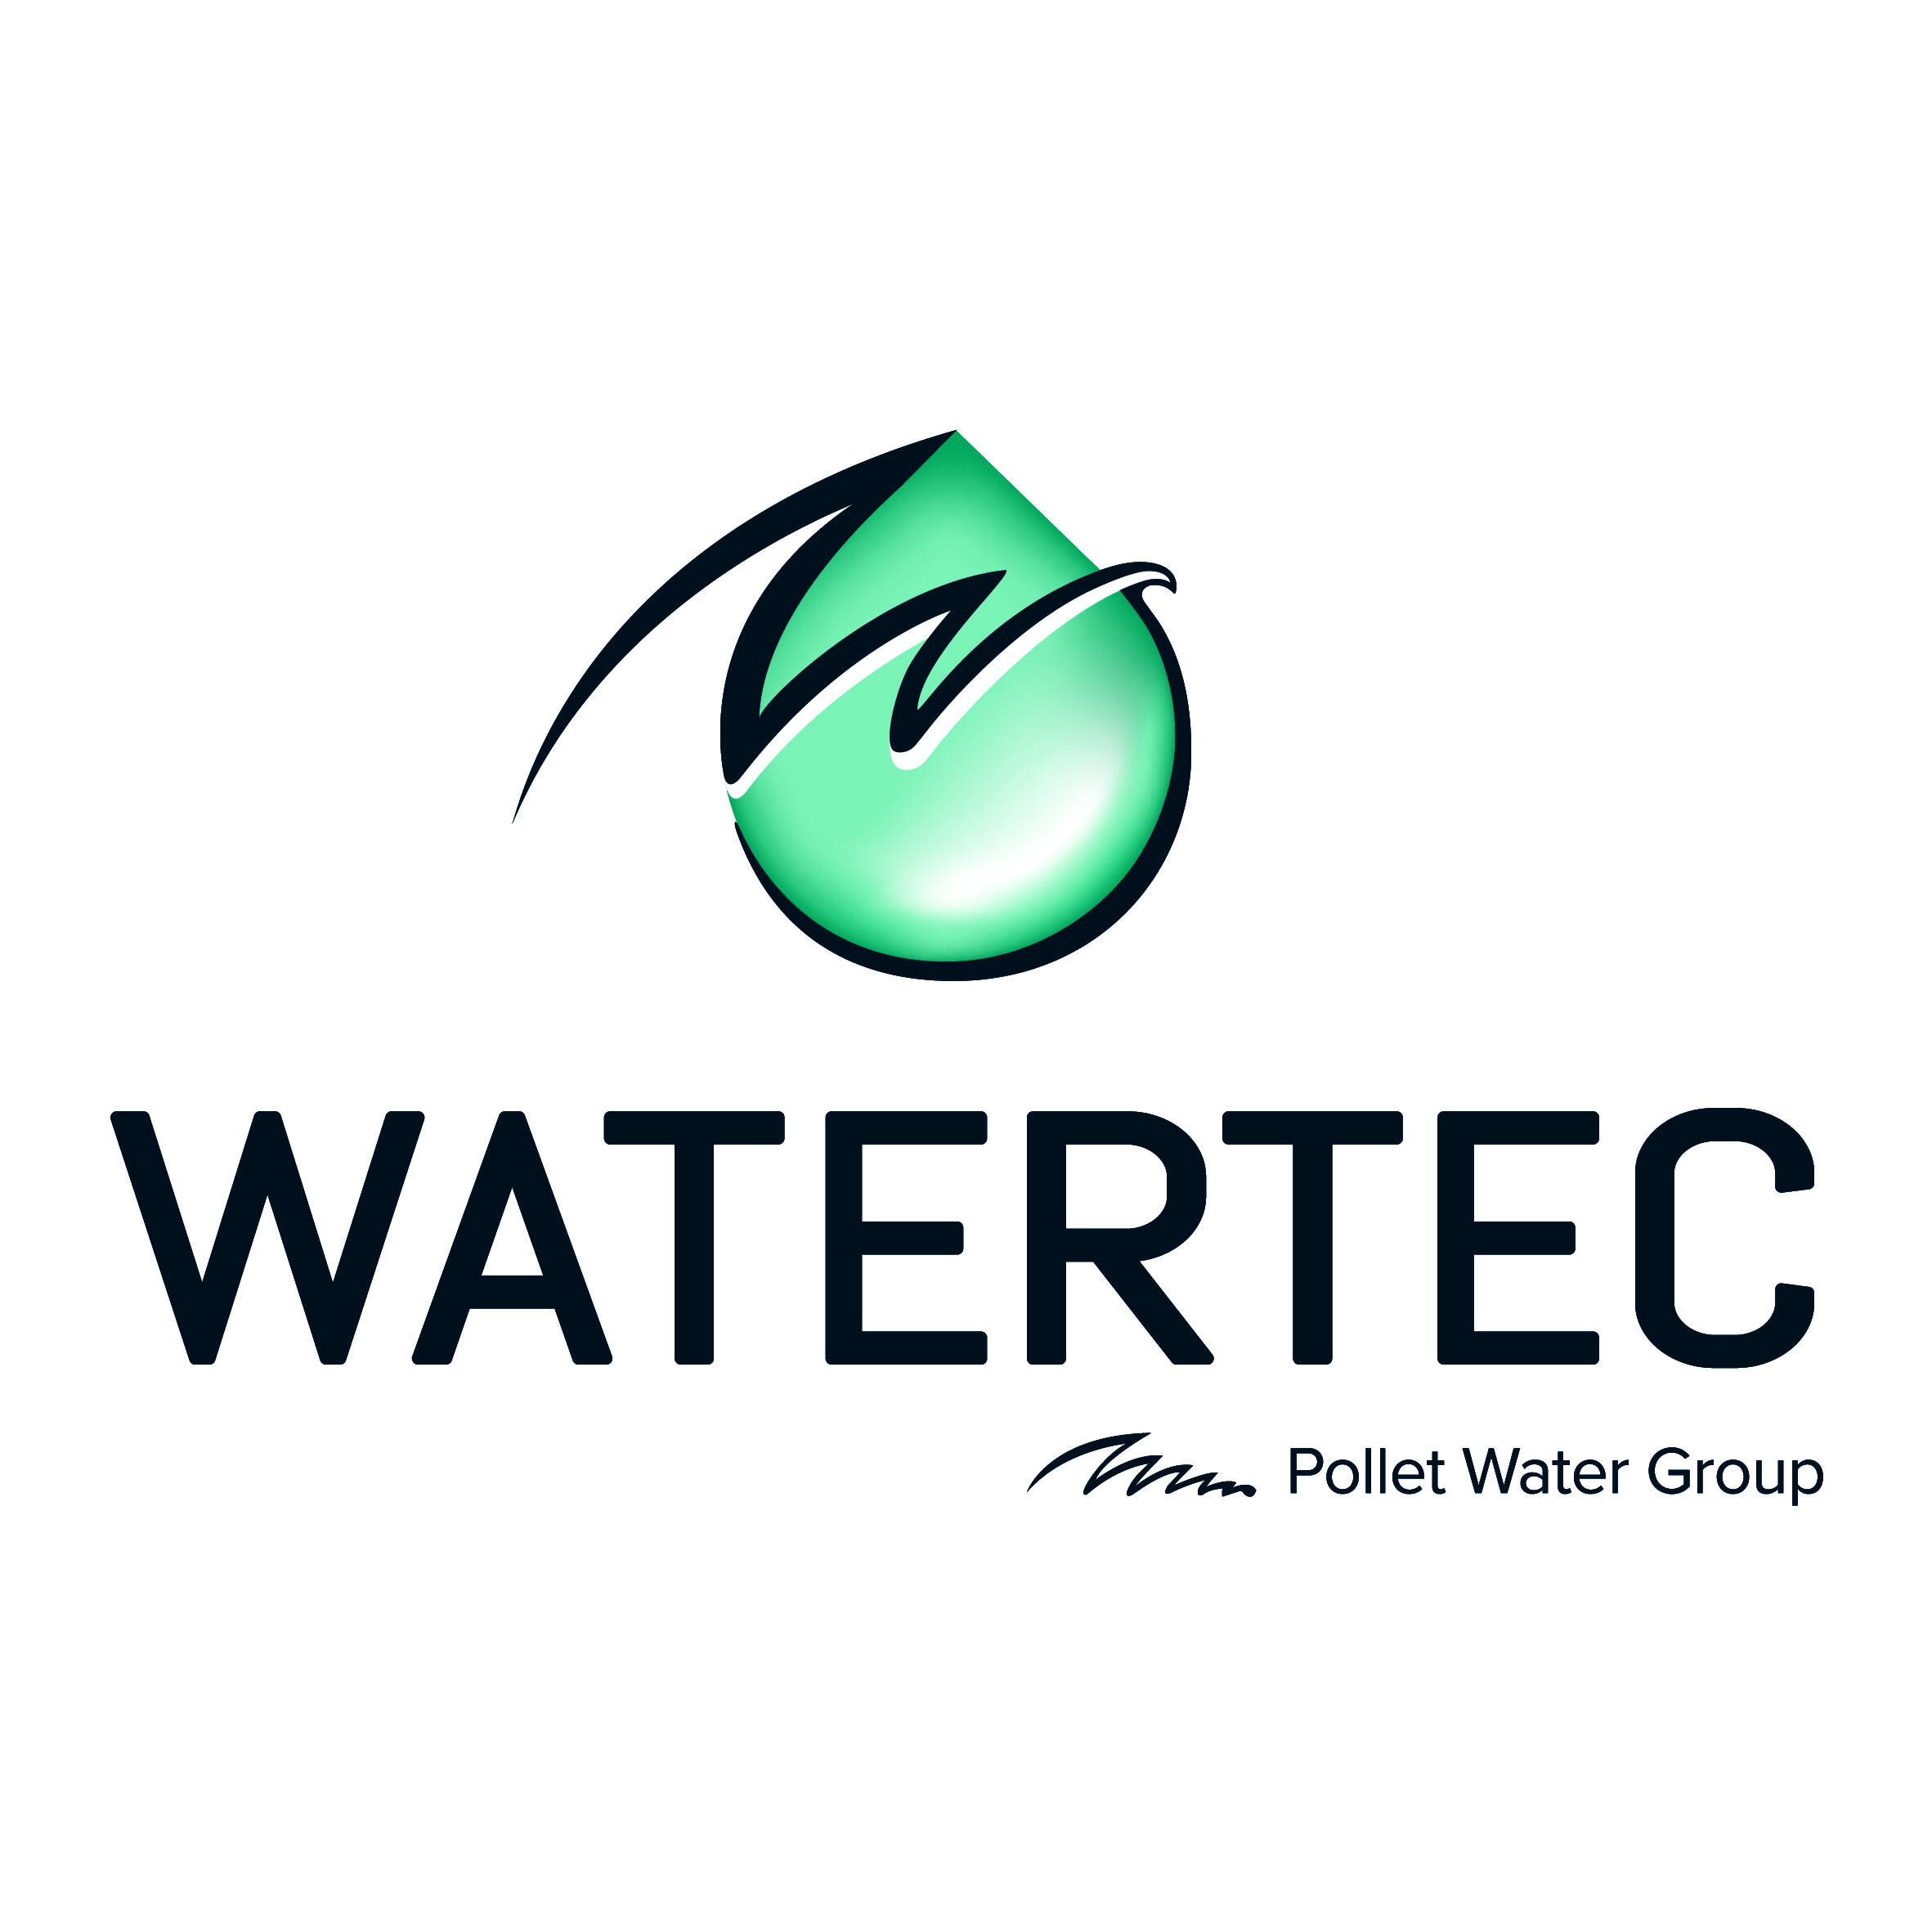 Watertec GmbH